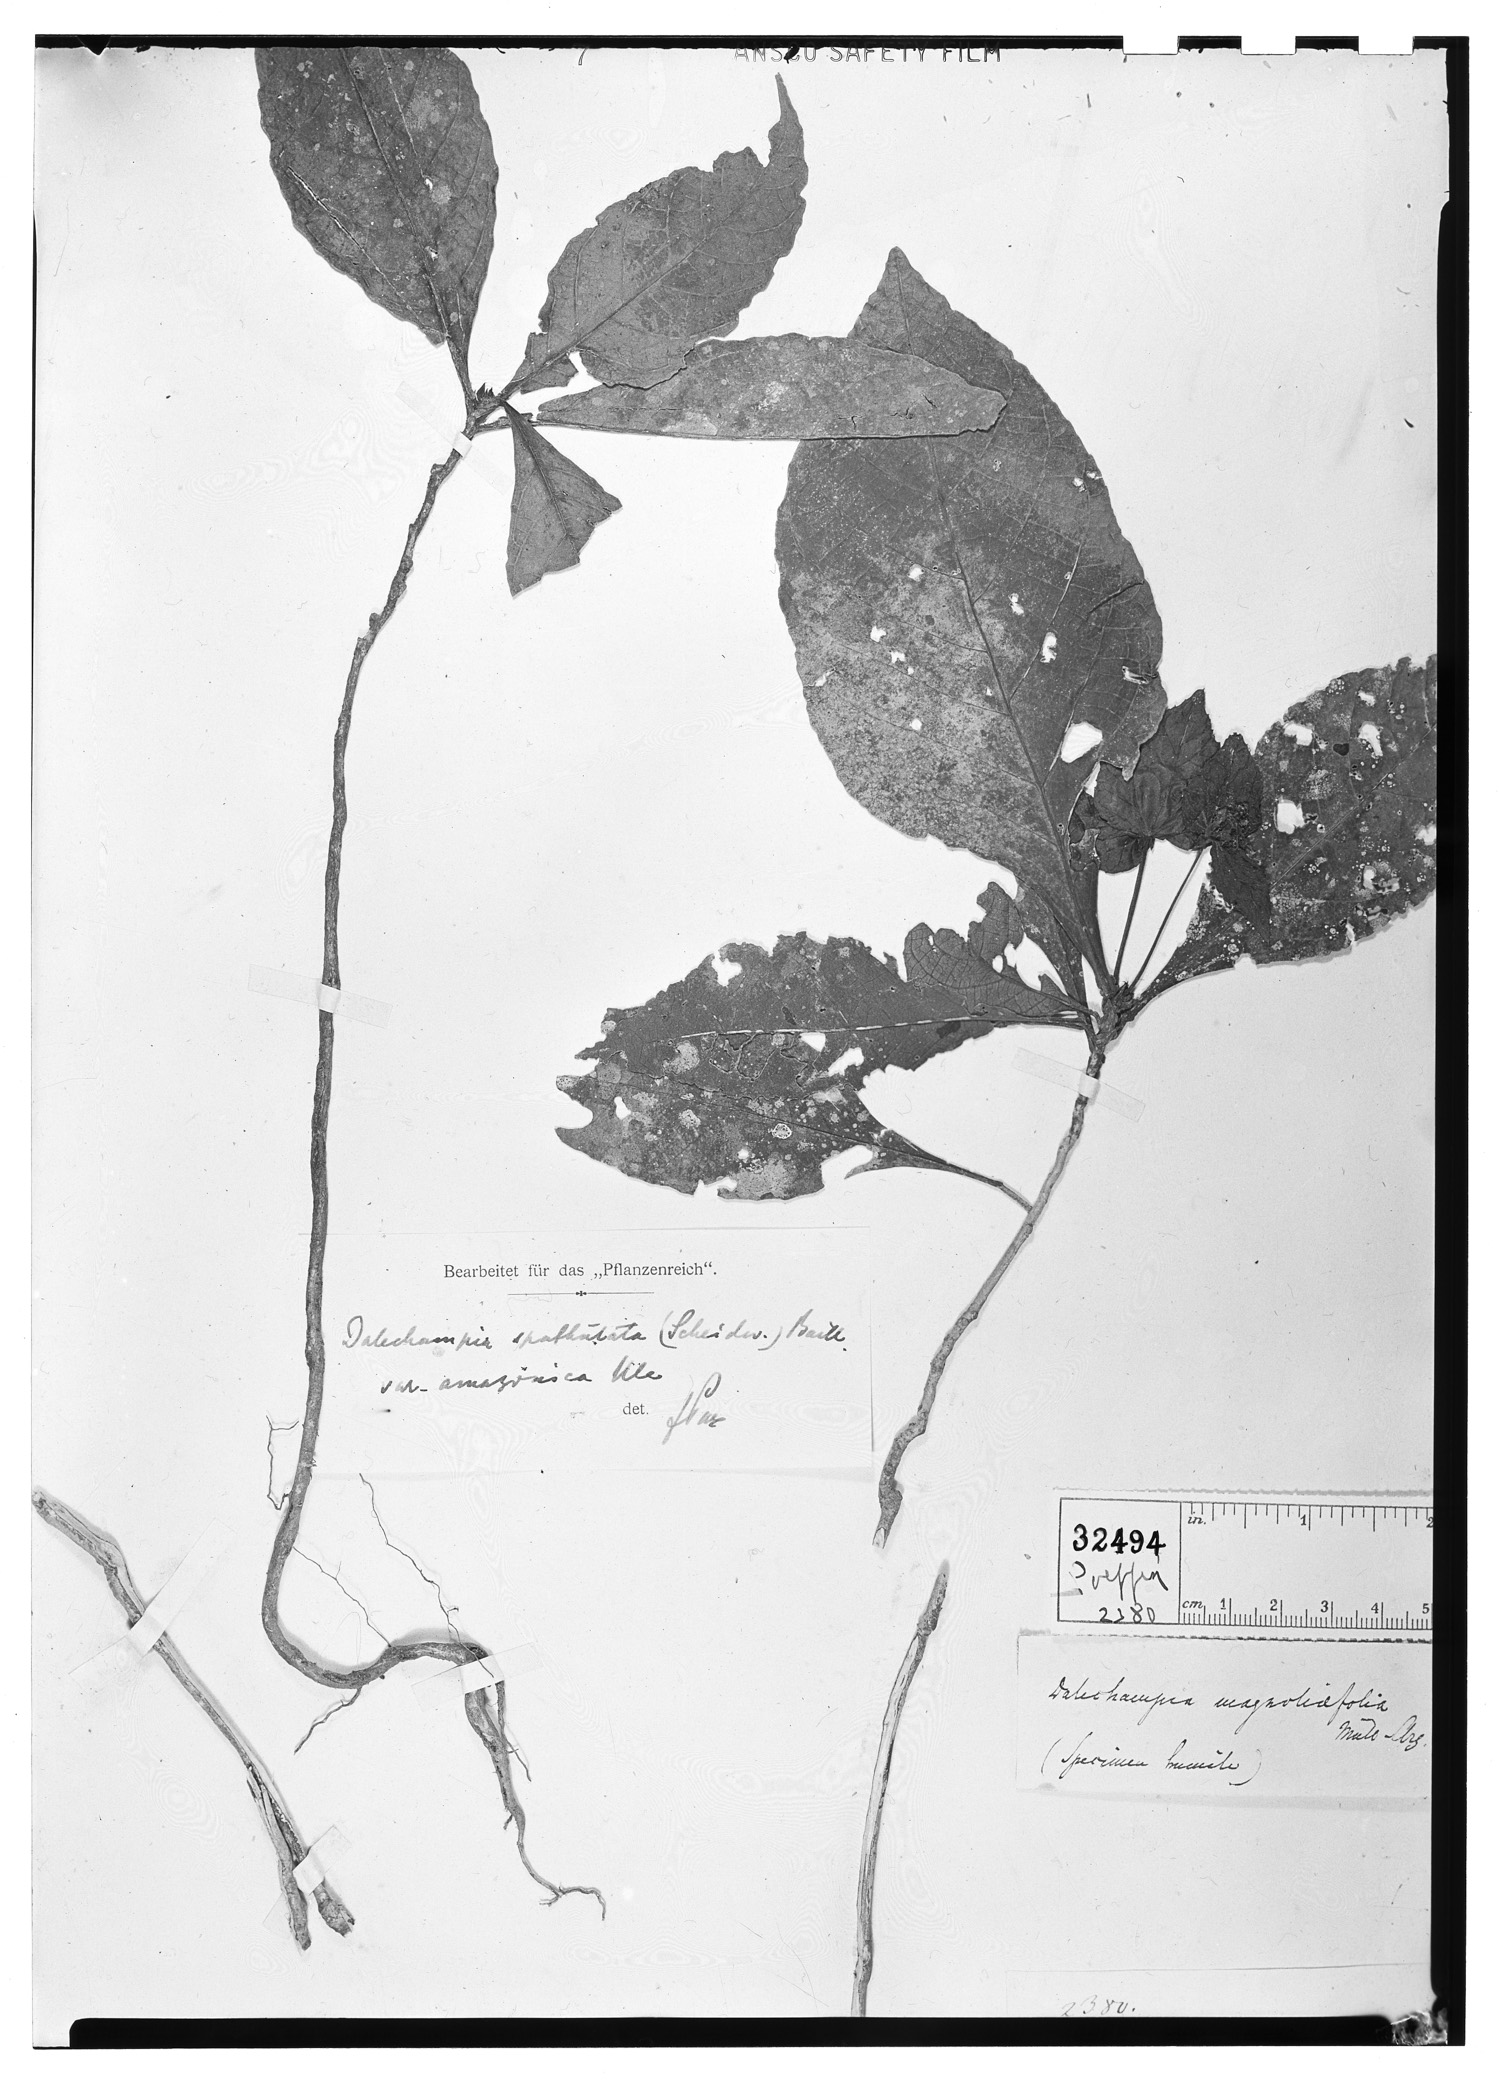 Dalechampia magnoliifolia image